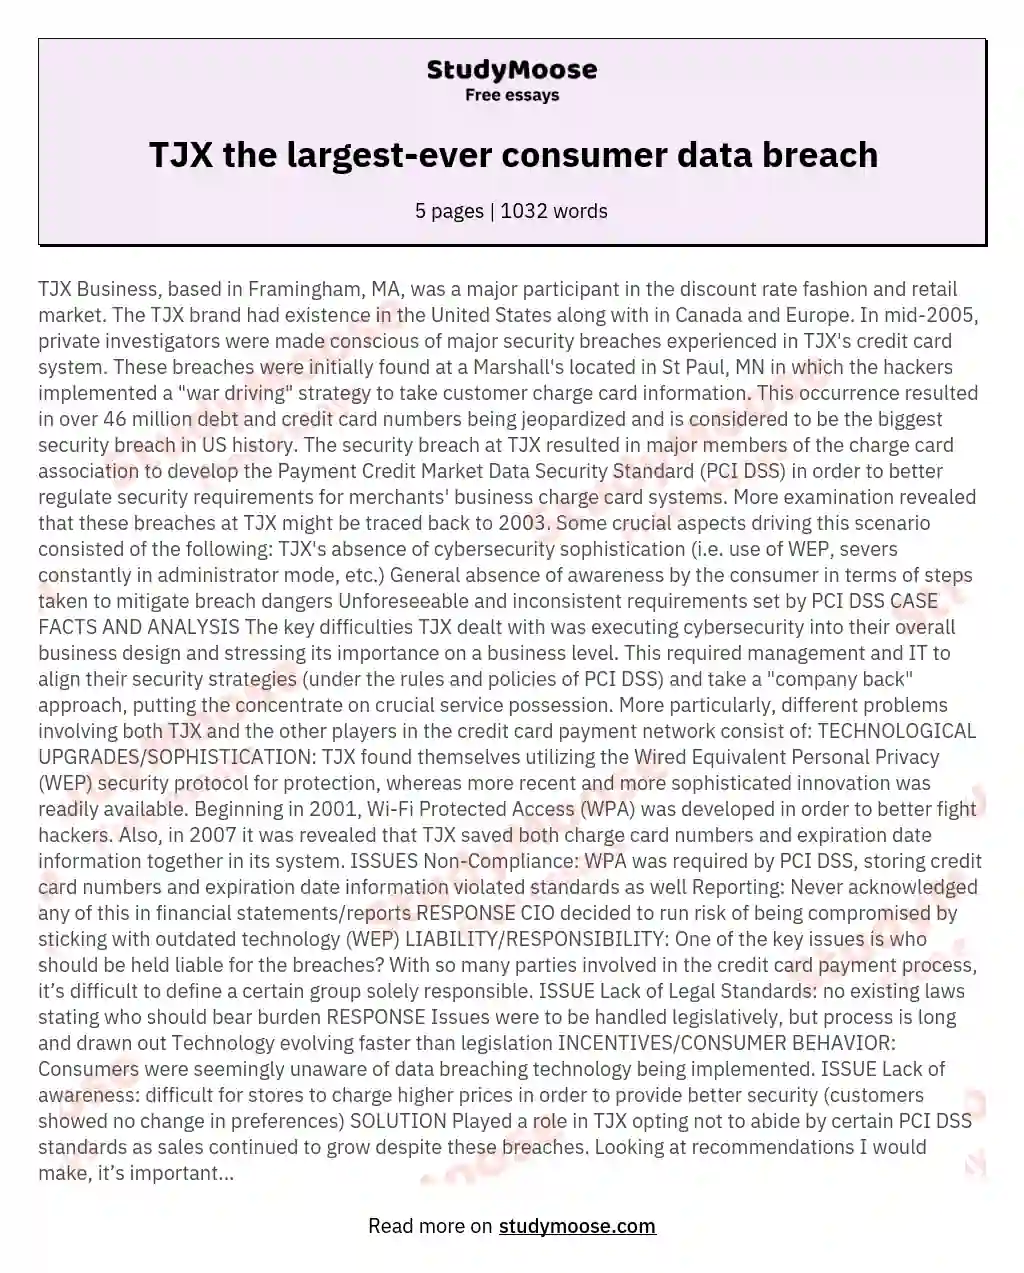 tjx data breach case study